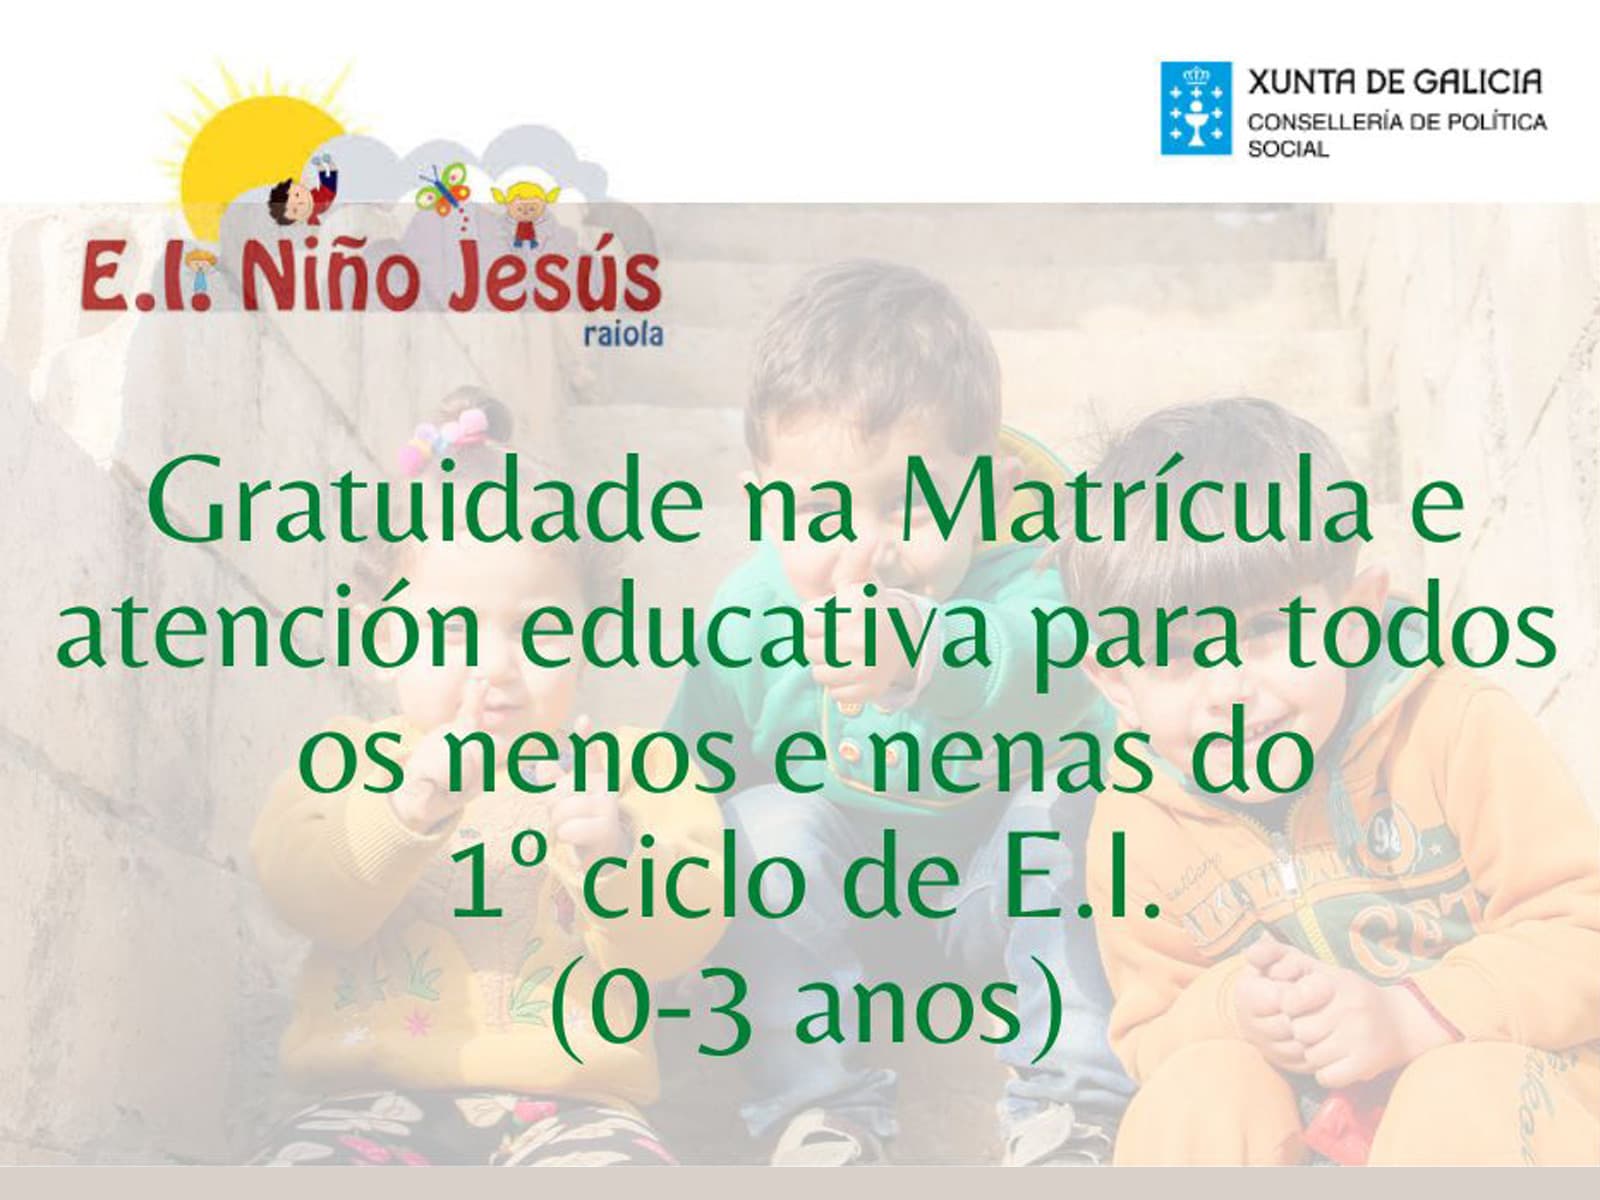 Escola infantil Niño Jesús